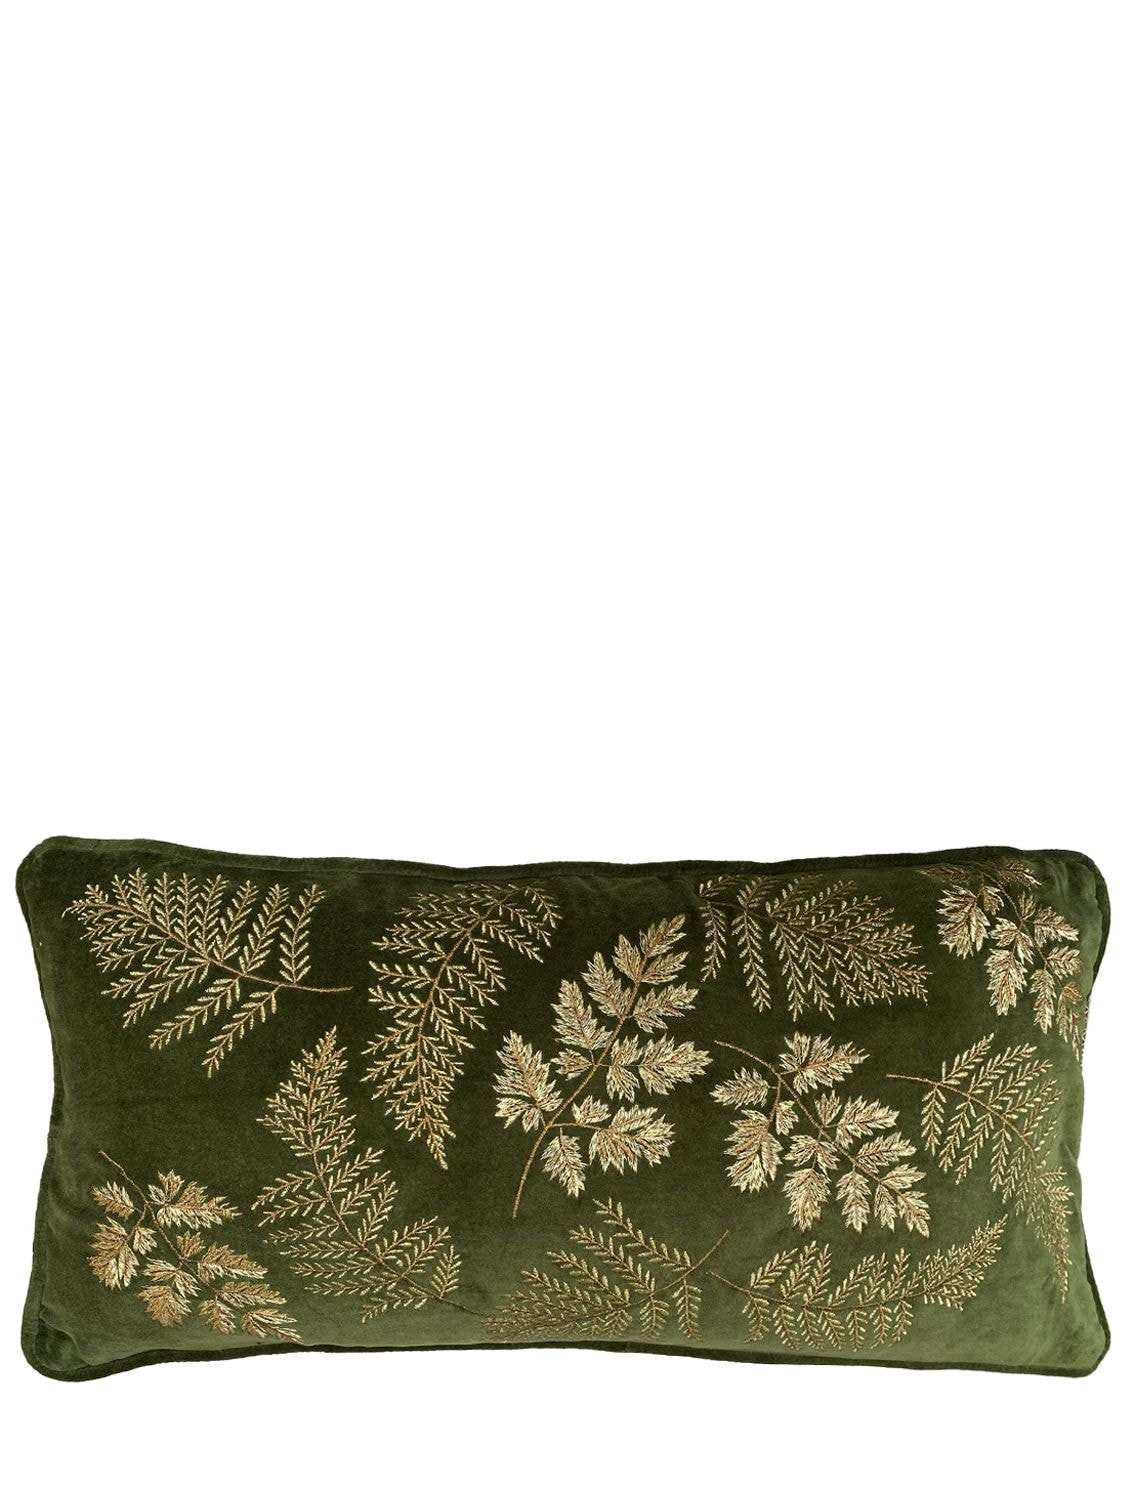 Les Ottomans Embroidered Velvet Cushion In Green